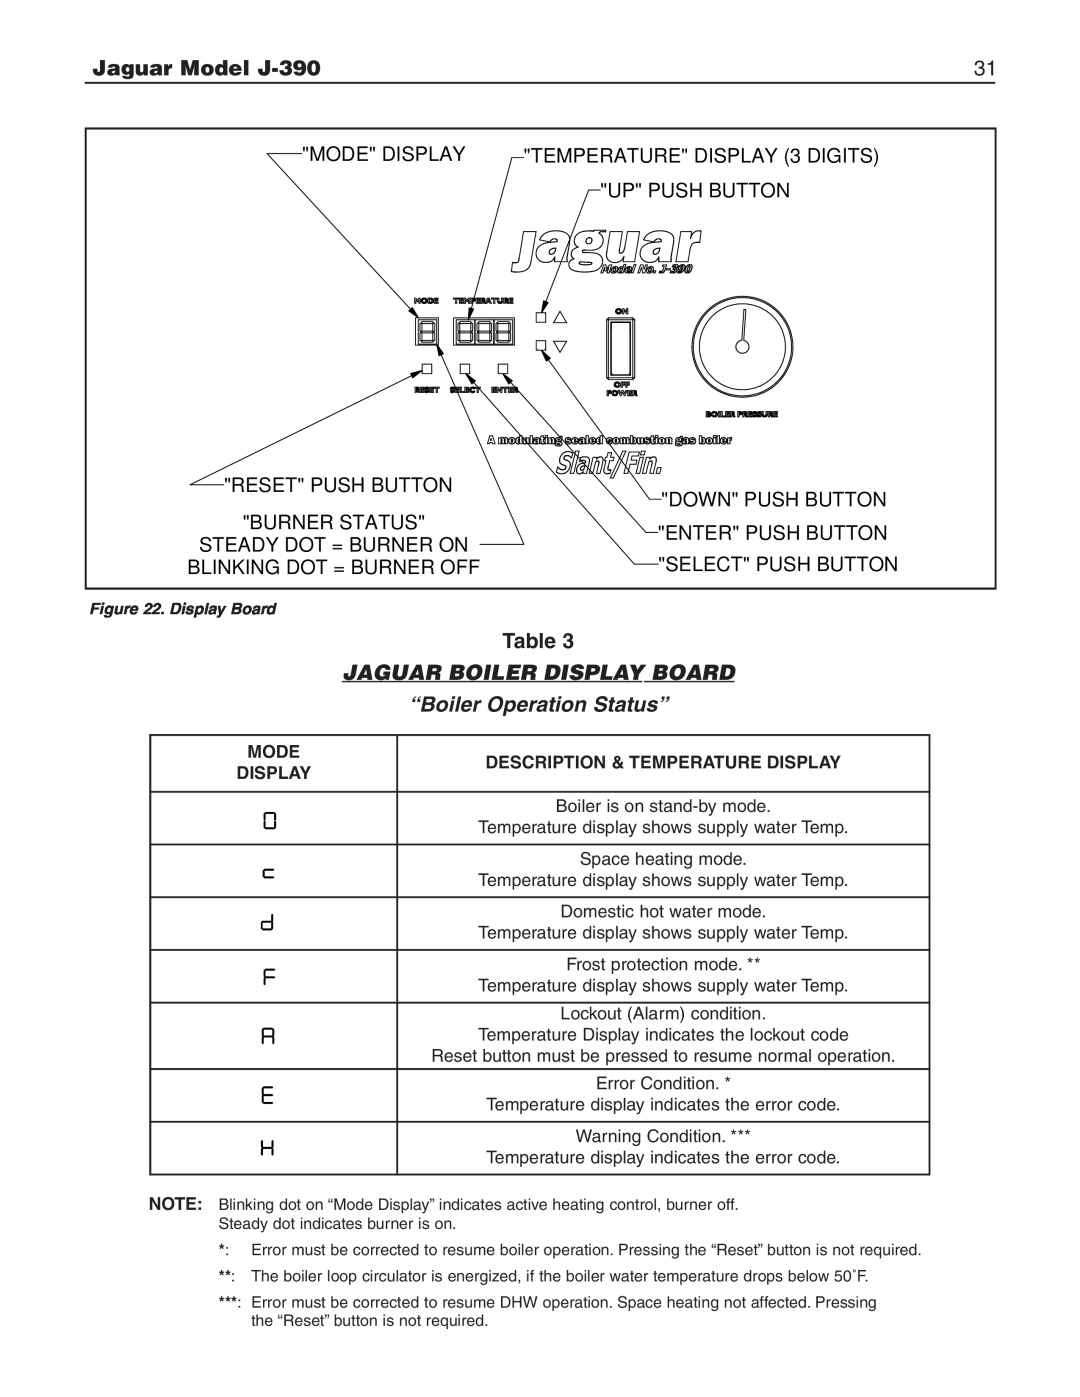 Slant/Fin installation instructions Jaguar Boiler Display Board, “Boiler Operation Status”, Jaguar Model J-390 